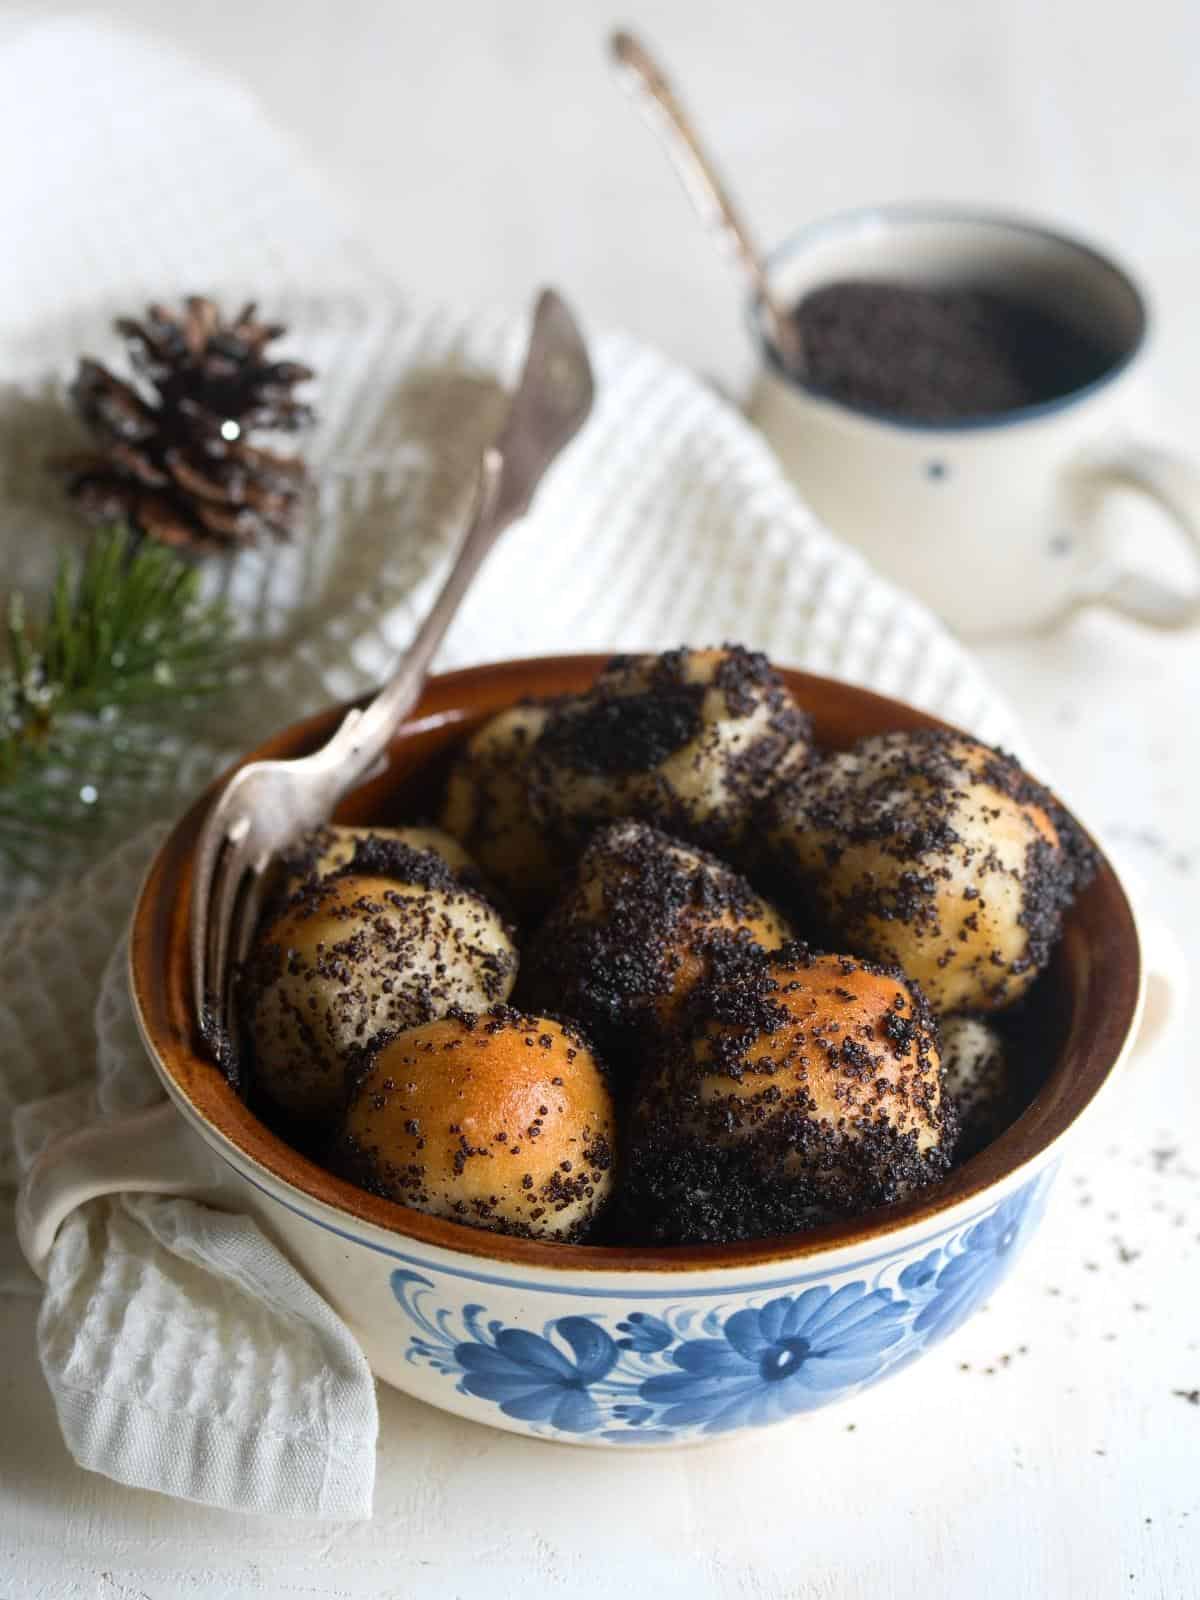 Slovak sweet bobalki balls sprinkled with poppy seeds, served in a bowl.